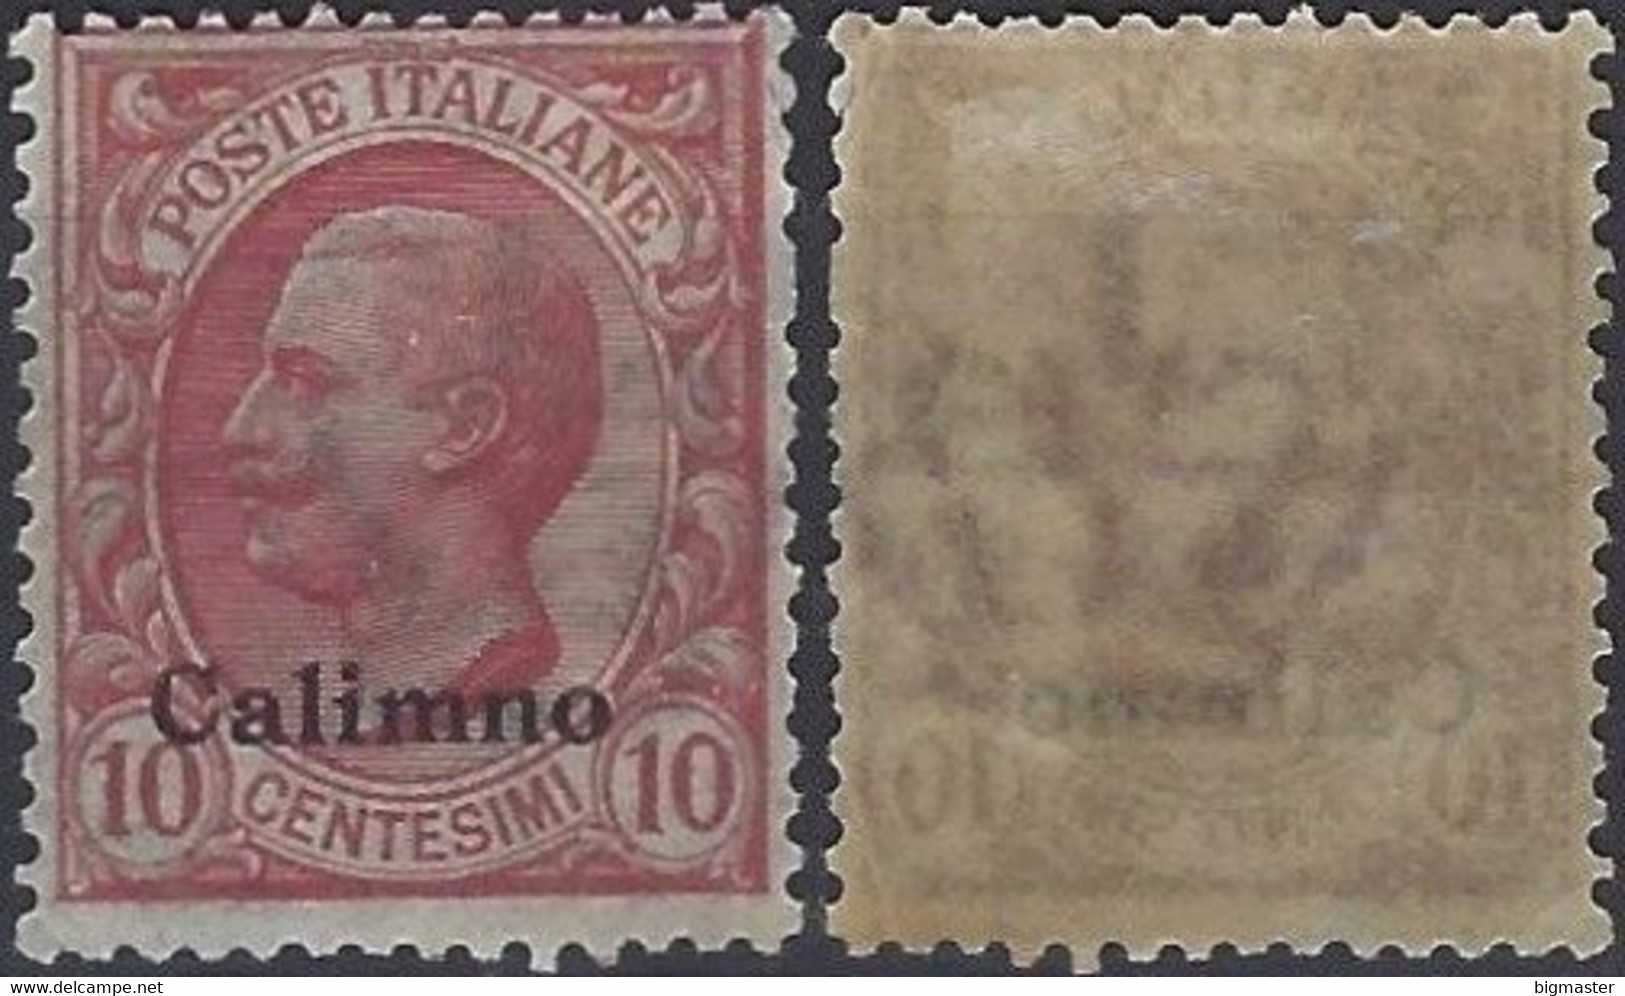 1912 Regno D'Italia IG 1912 IT-EG CA3 10c Italy Stamps Overprinted 'Calimno' New - Aegean (Calino)